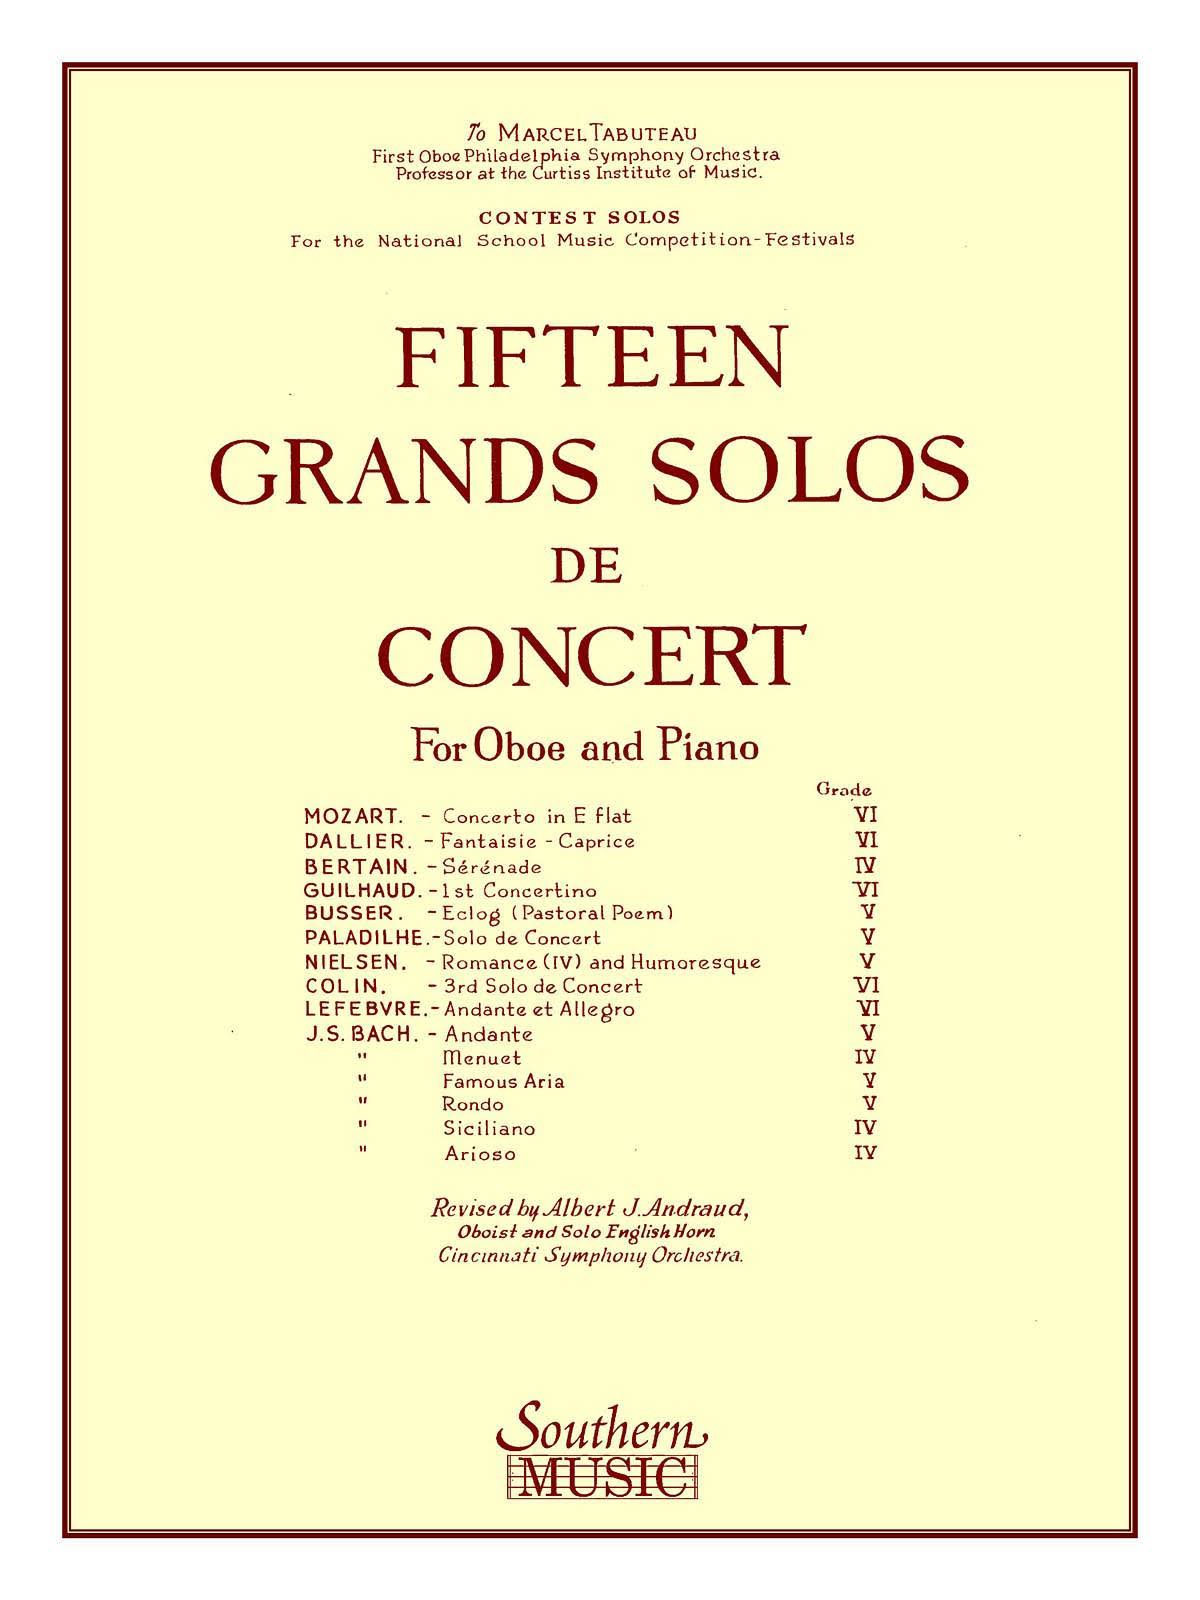 15 Grands Solos de Concert (Sheet Music)